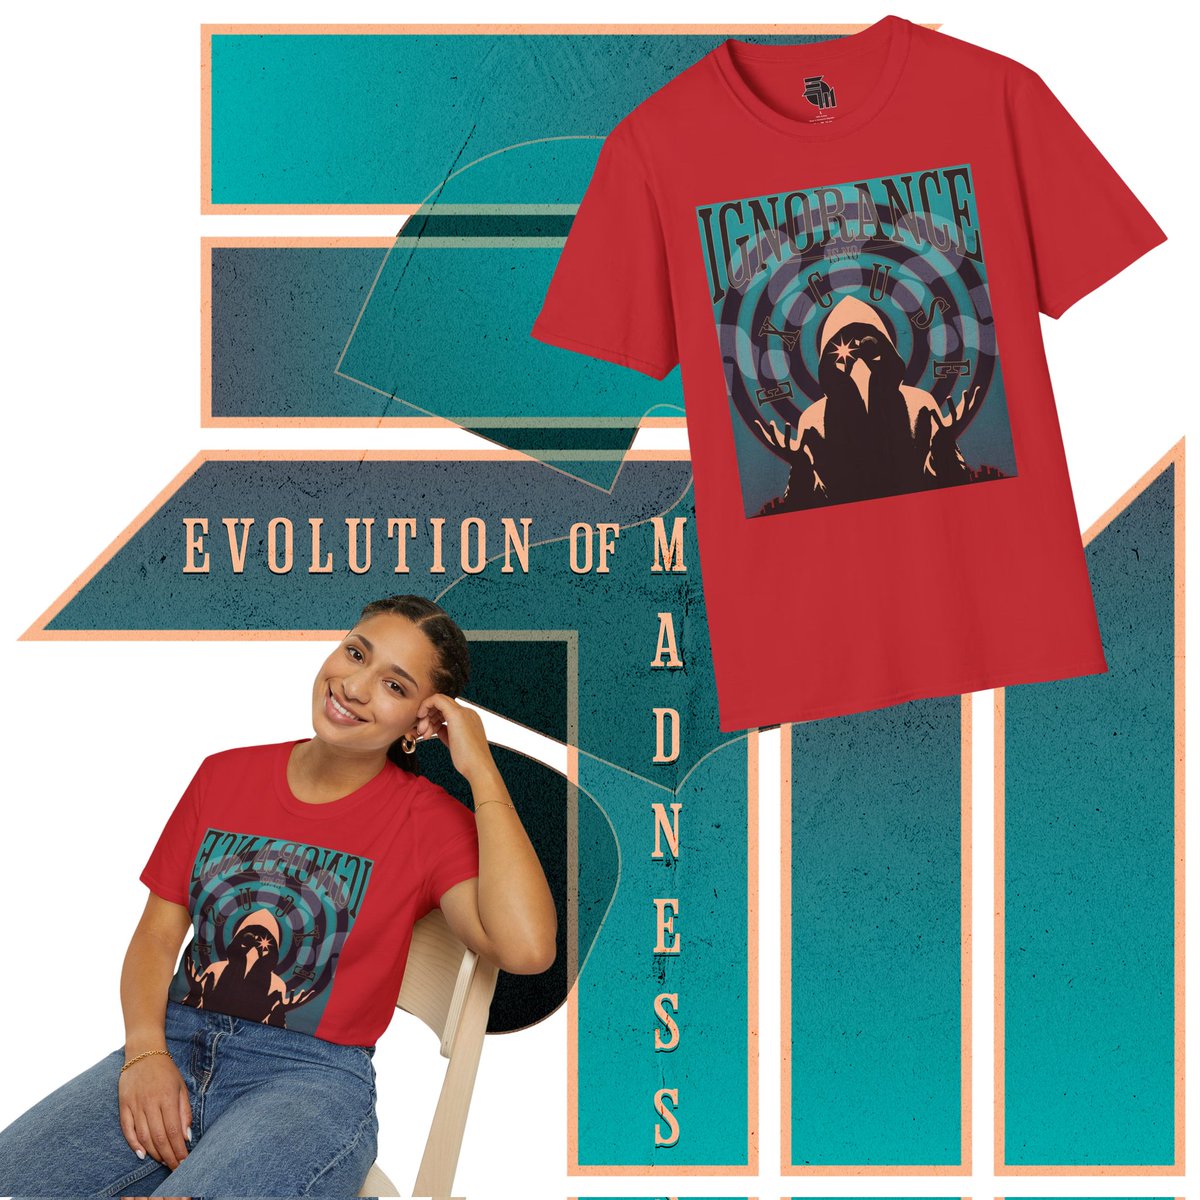 evolutionofmadness.etsy.com/listing/172113…
#evolutionofmadness #edgytee #mysterioustee #gothicstreetwear #trendytee #etsyshop #EtsySeller #etsystore